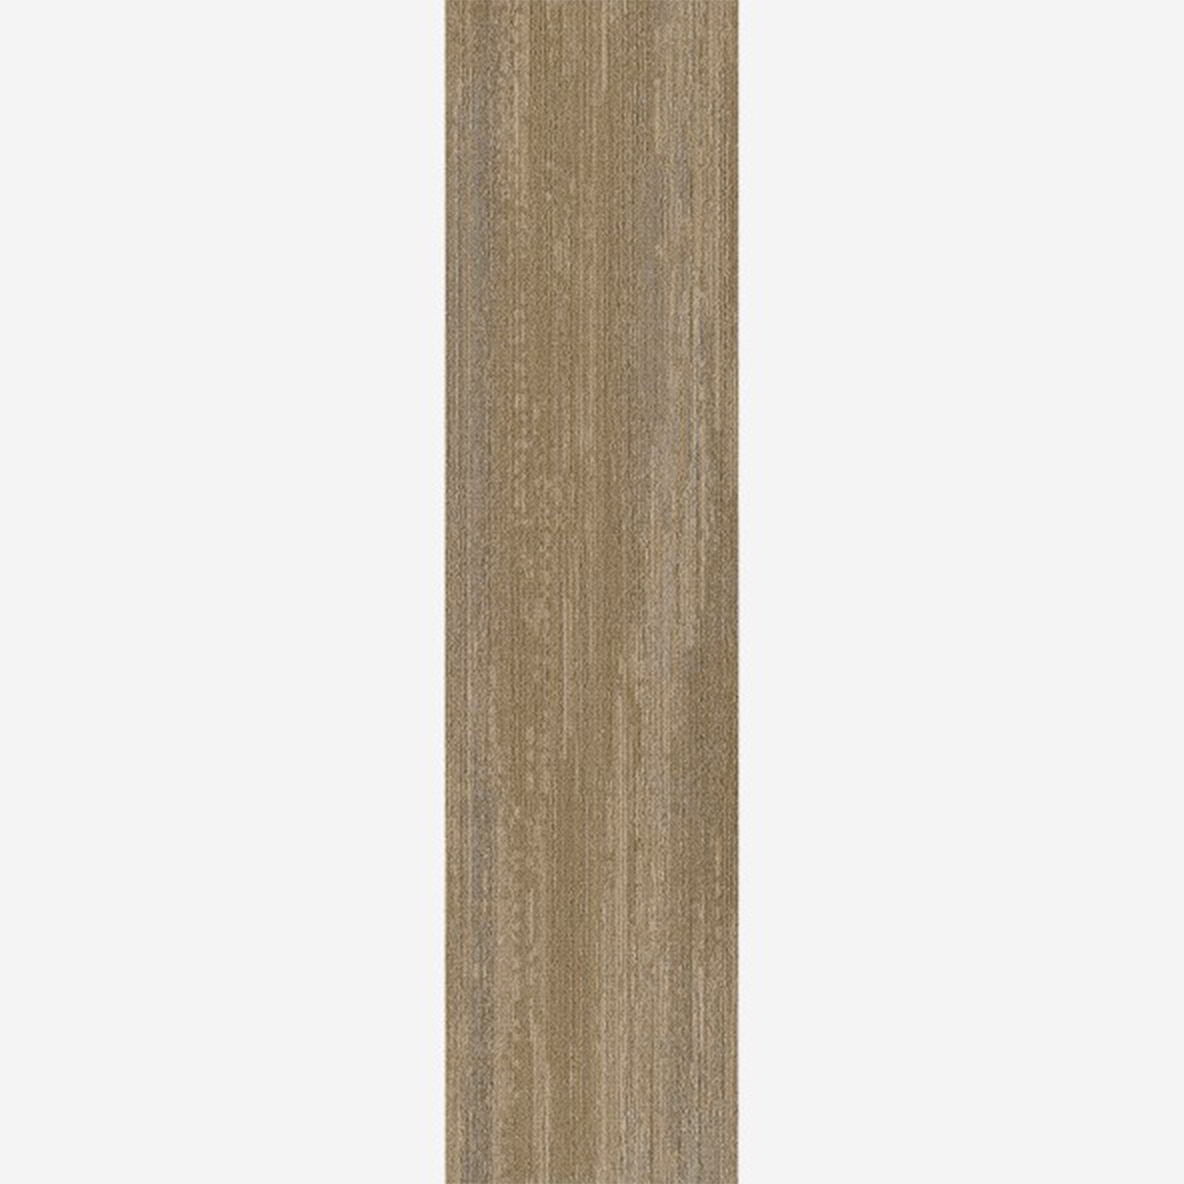 Ingrained Commercial Carpet Plank Colors .28 Inch x 25 cm x 1 Meter Per Plank Beech Light full 